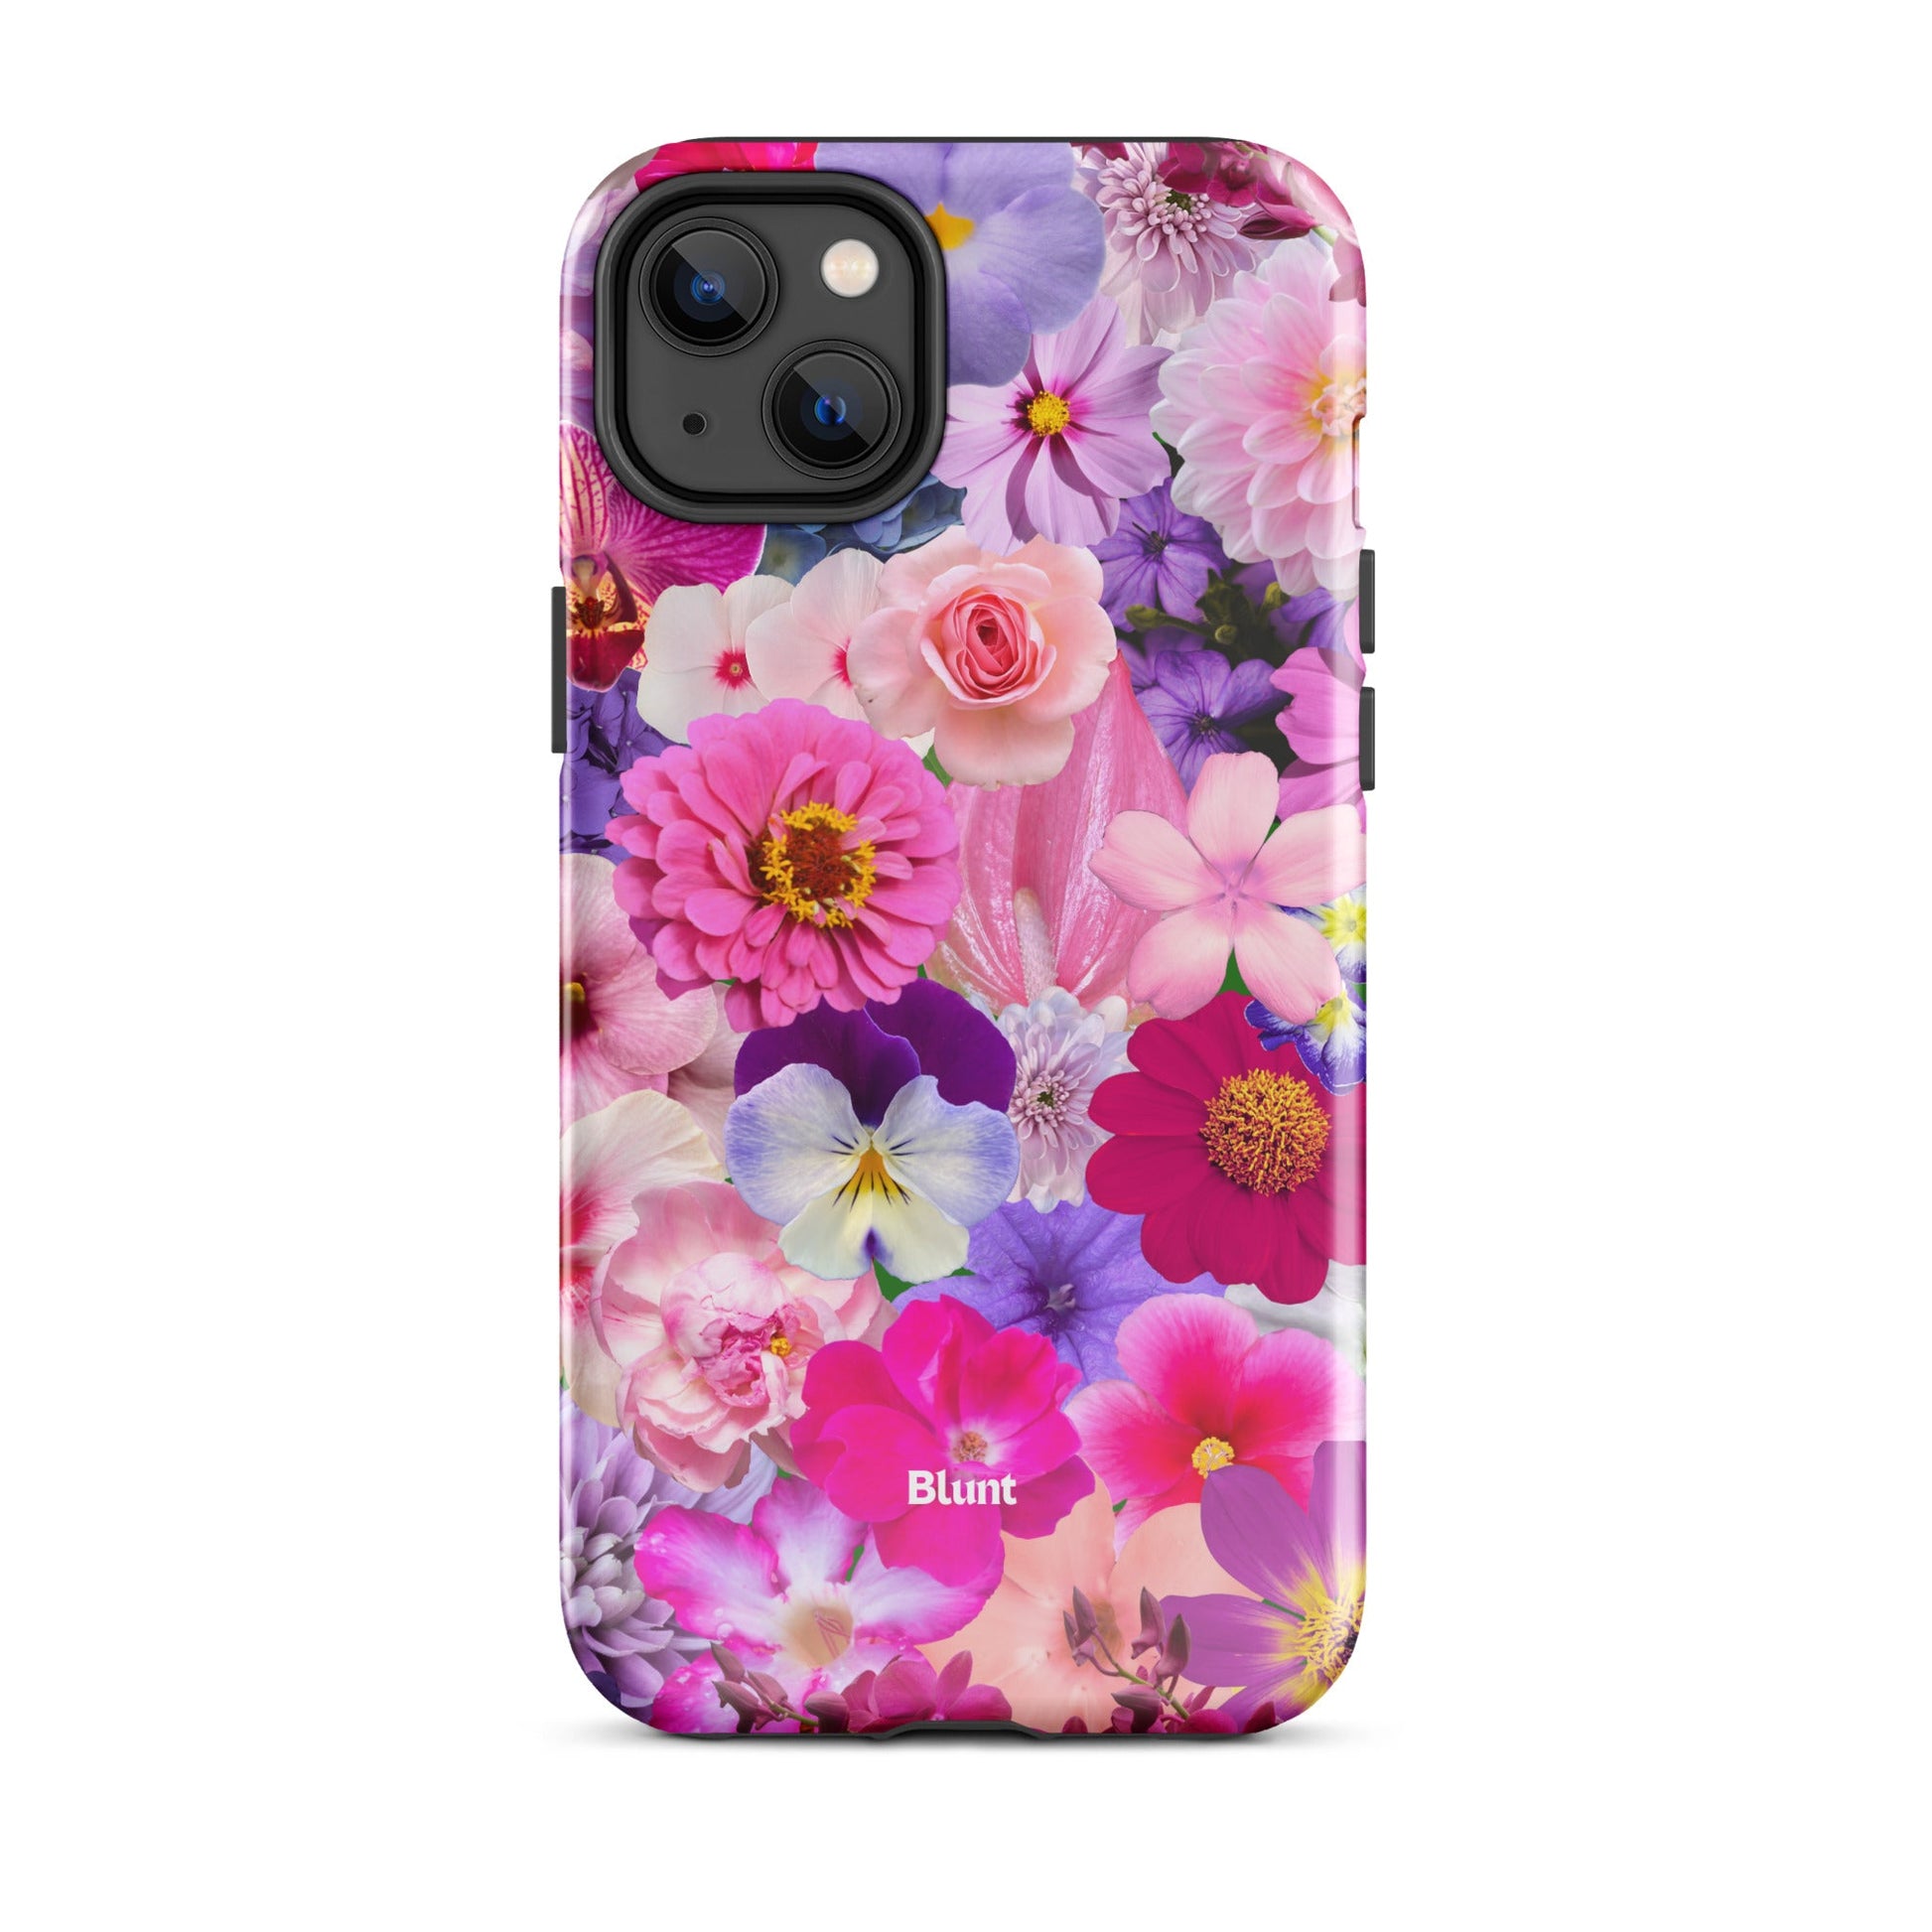 Petals iPhone Case - blunt cases